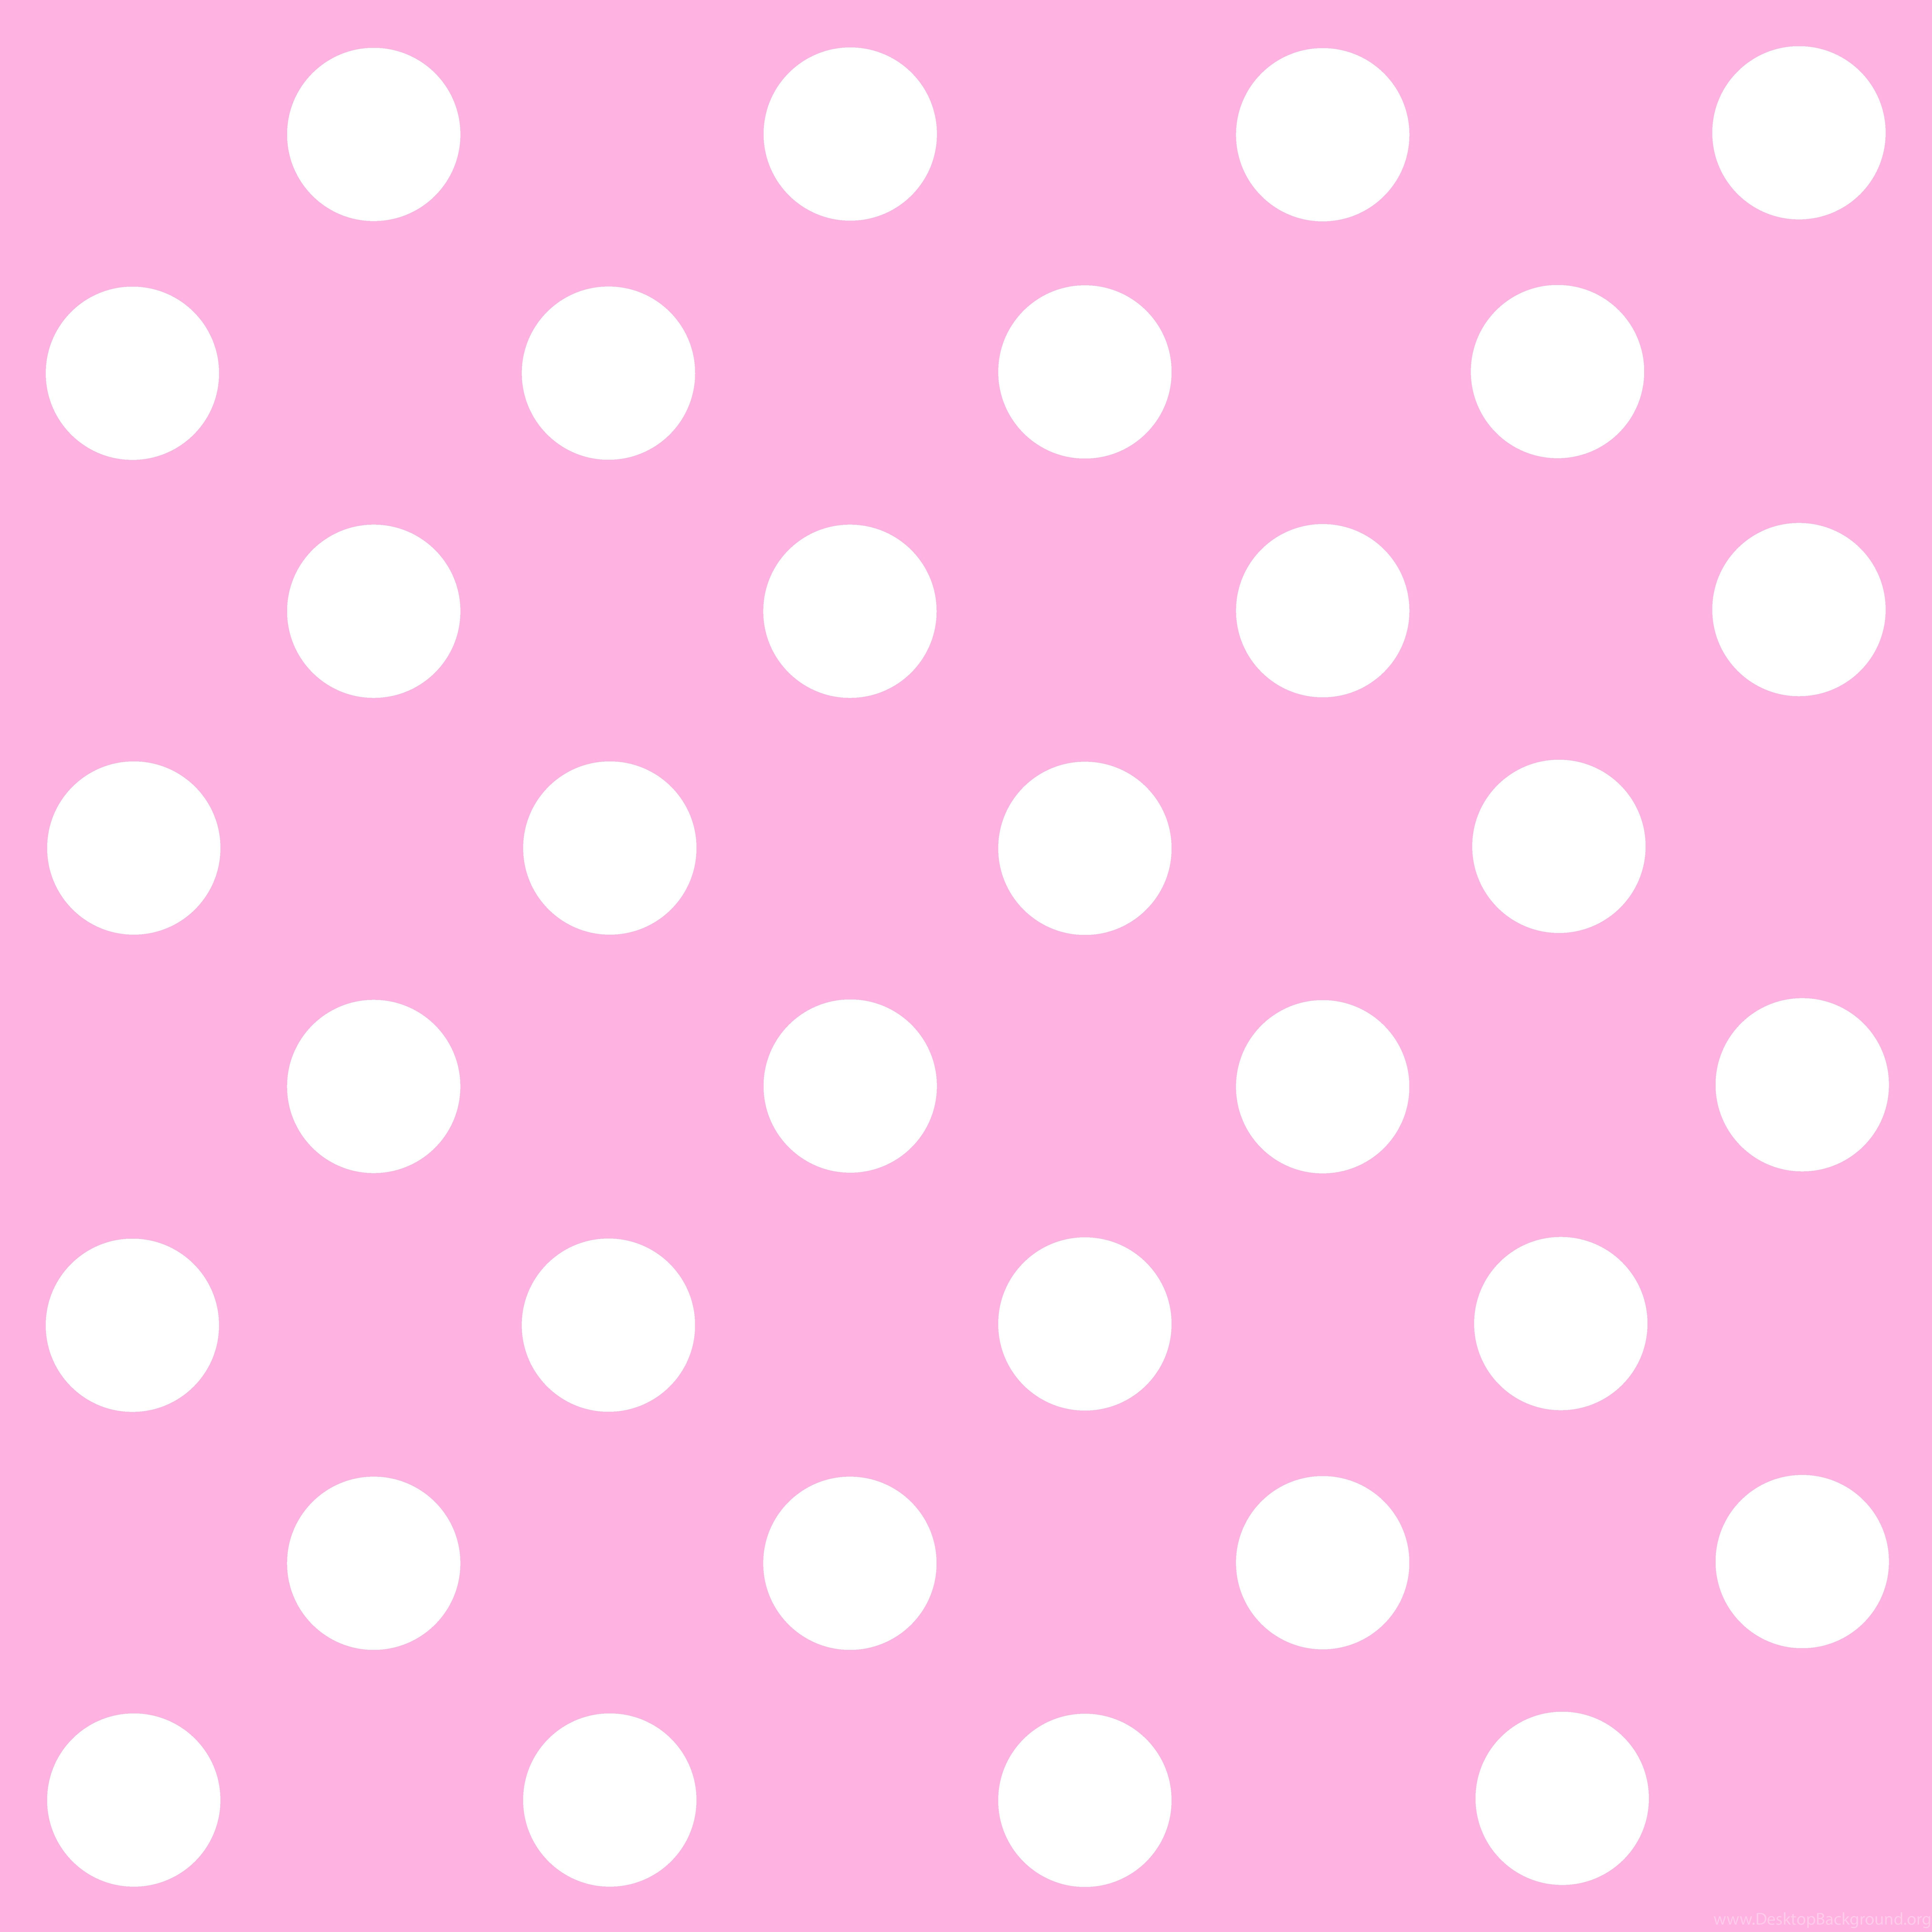 Pink And White Polka Dot Wallpaper .desktopbackground.org